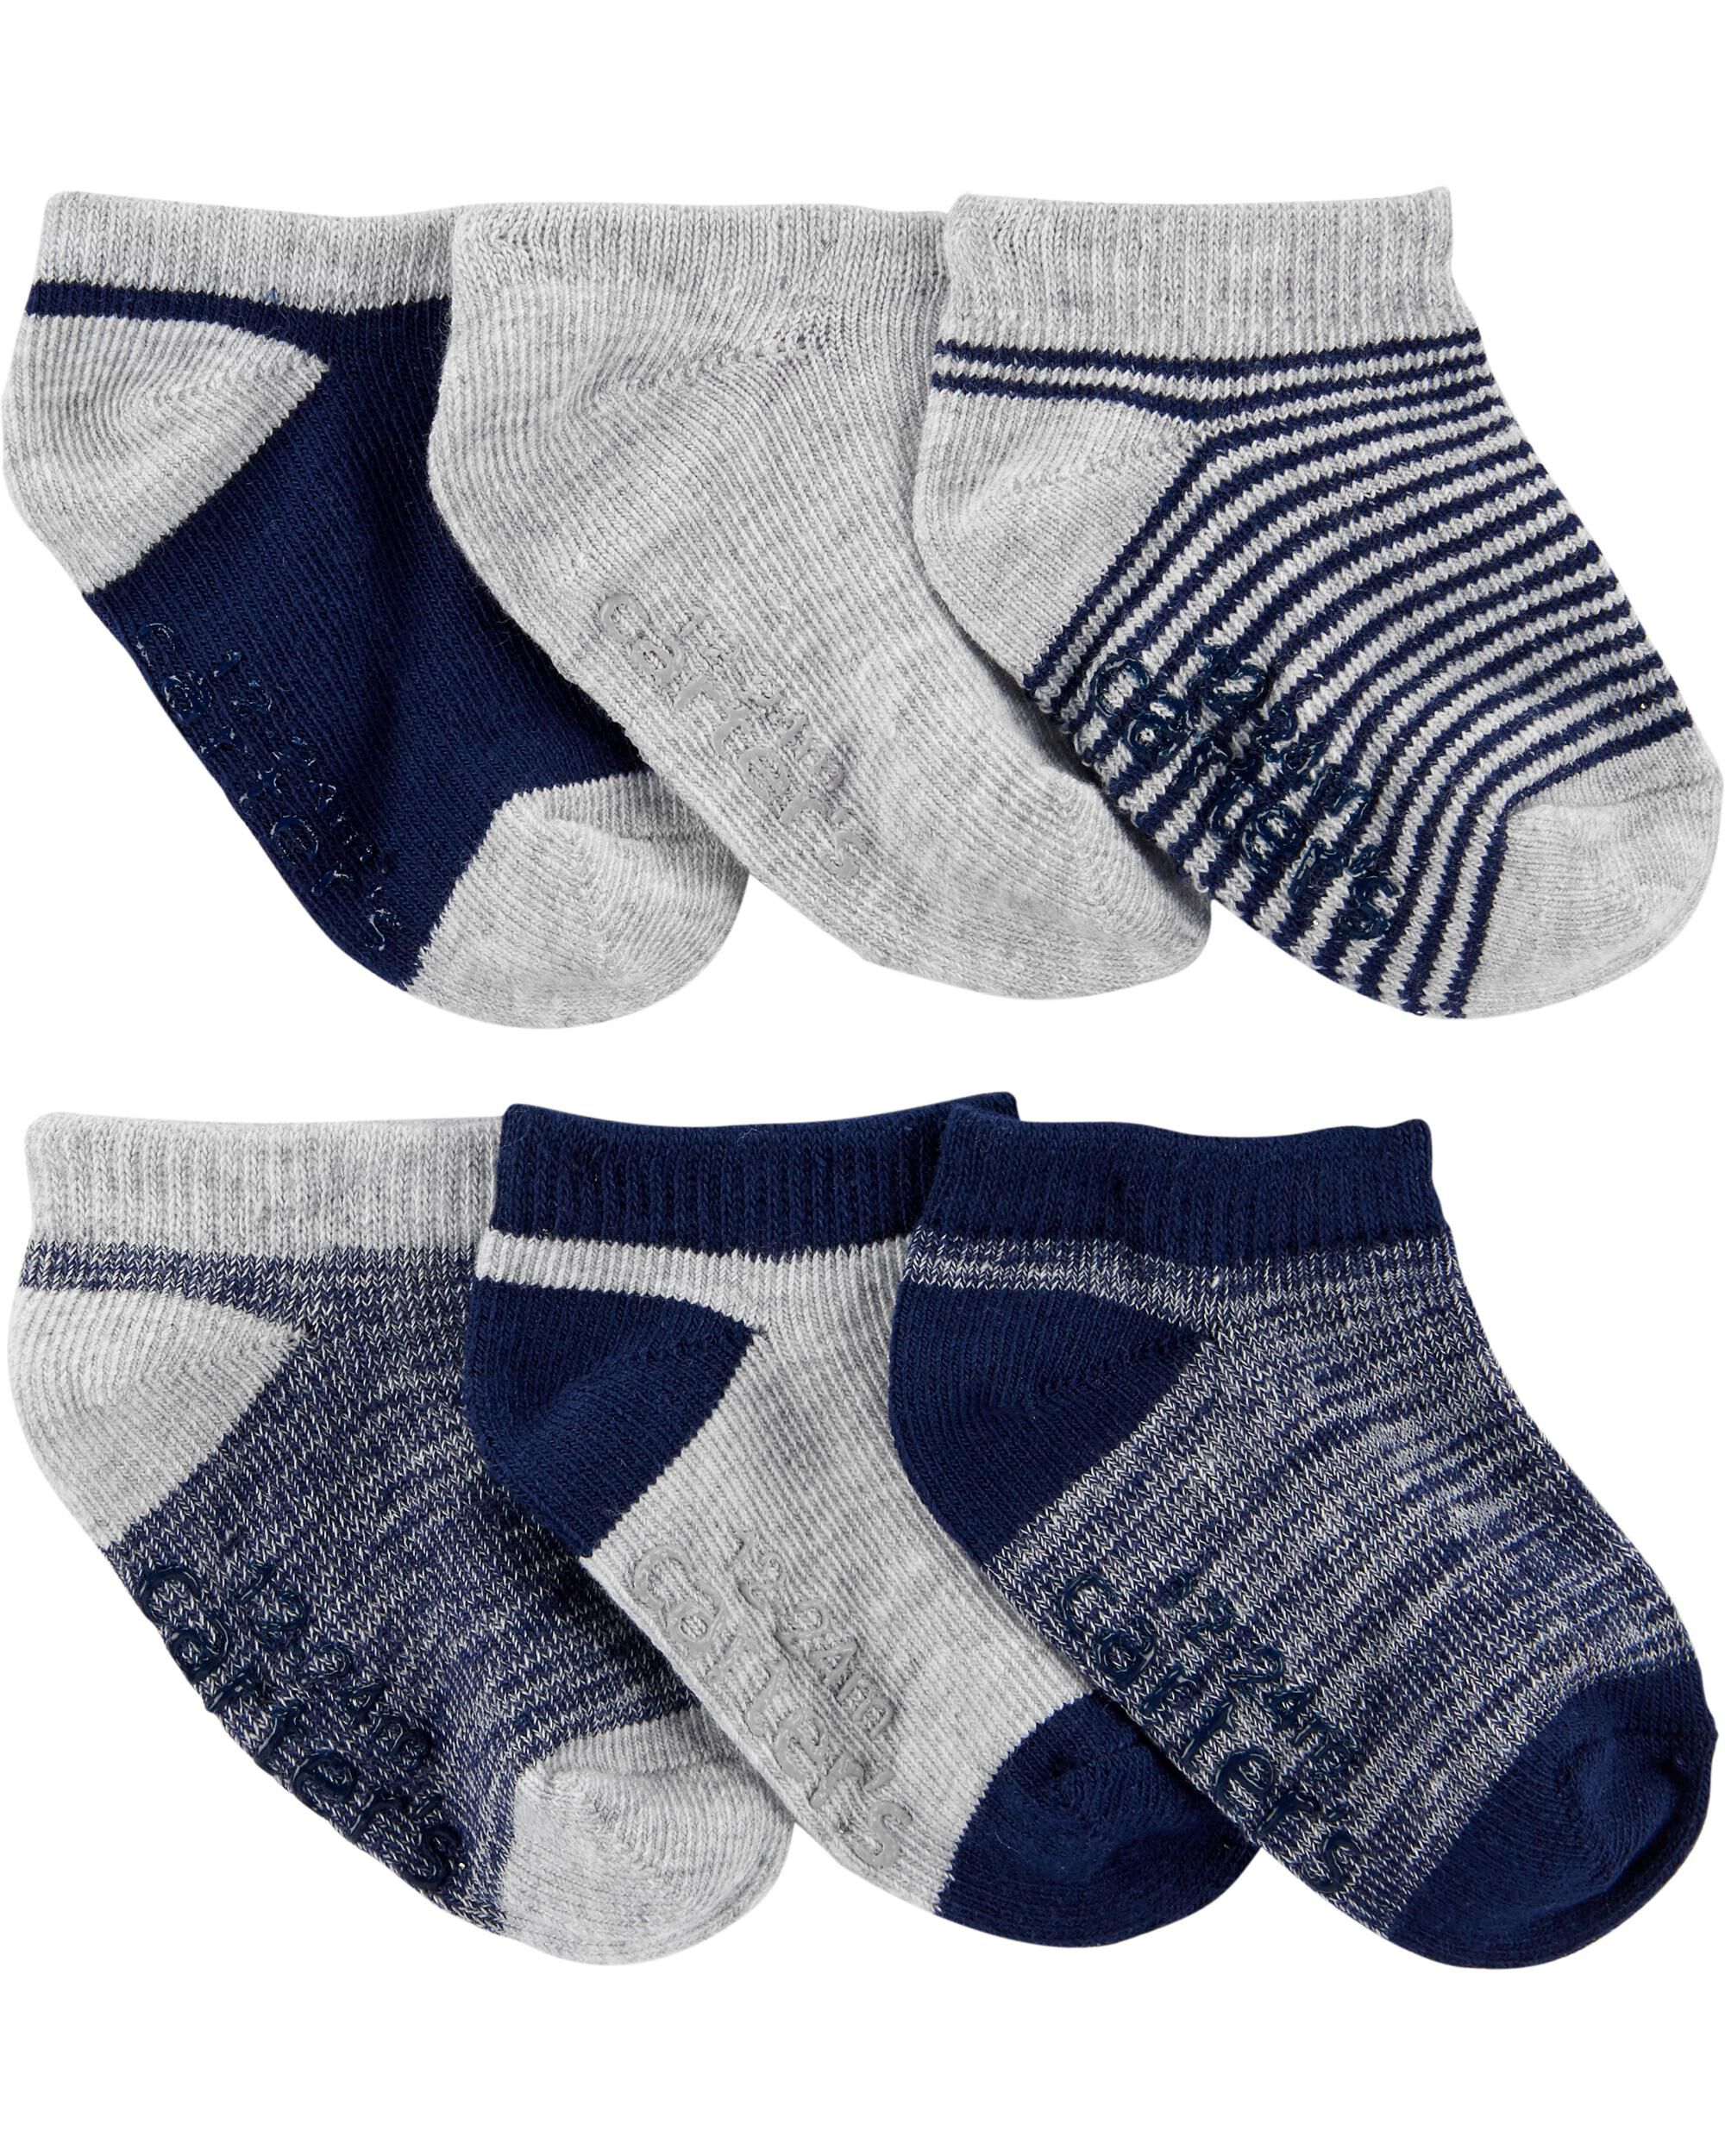 6-Pack Ankle Socks | carters.com